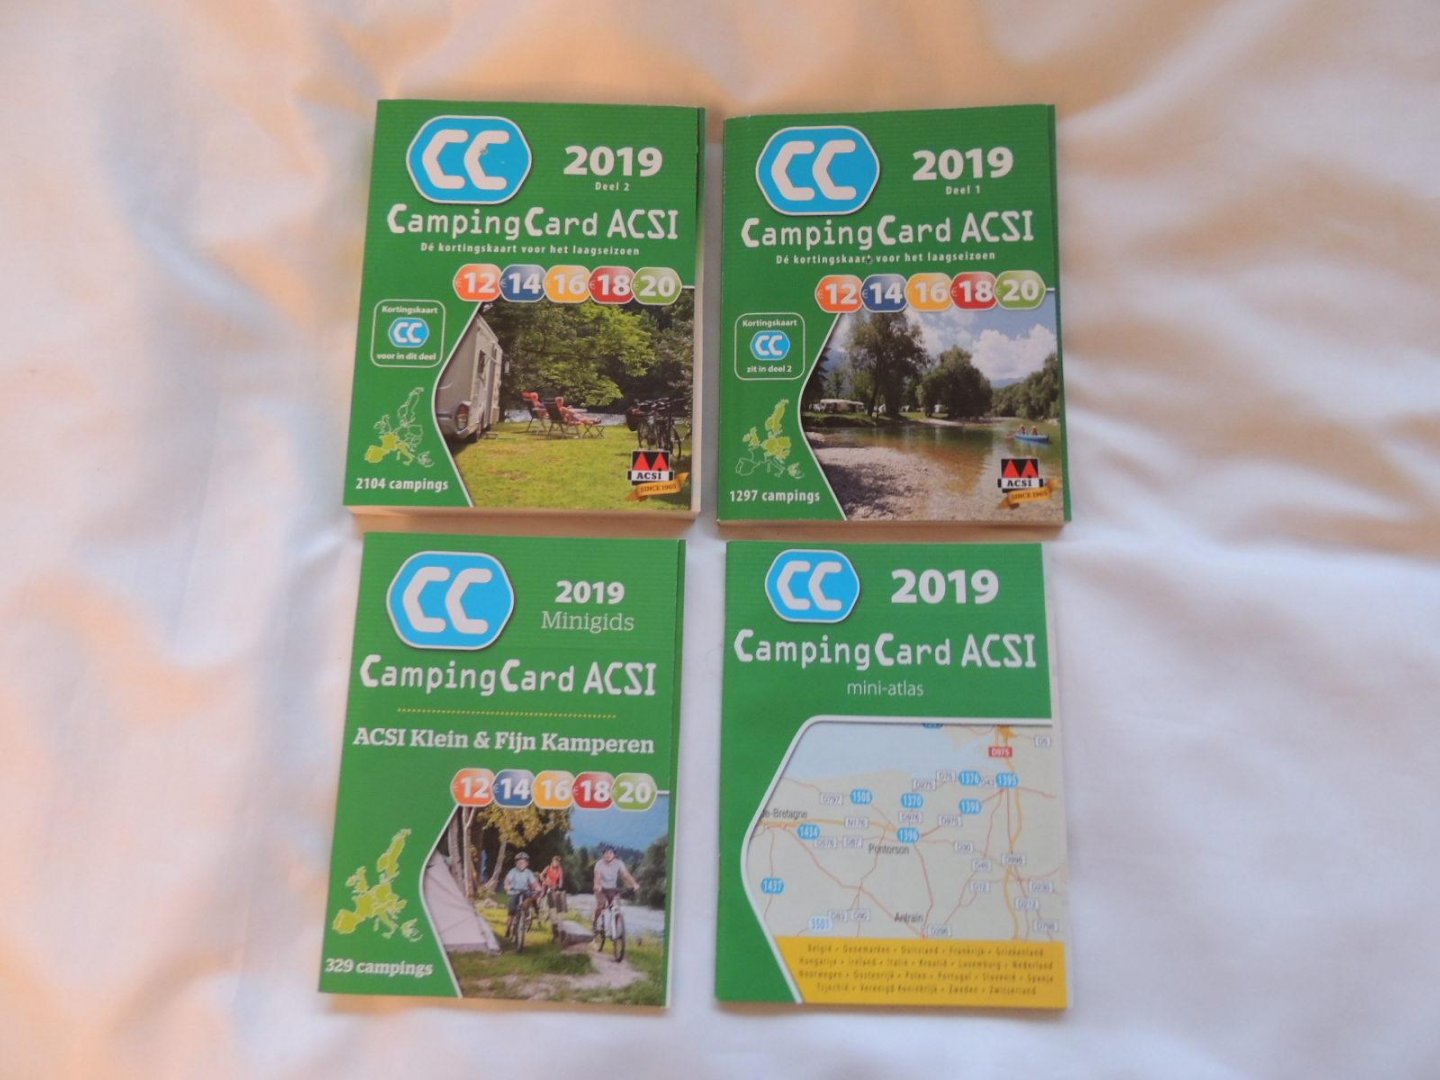  - CampingCard ACSI 2019 Deel 1 - 2 en Minigids klein & fijn kamperen - en Mini atlas - Camping Card